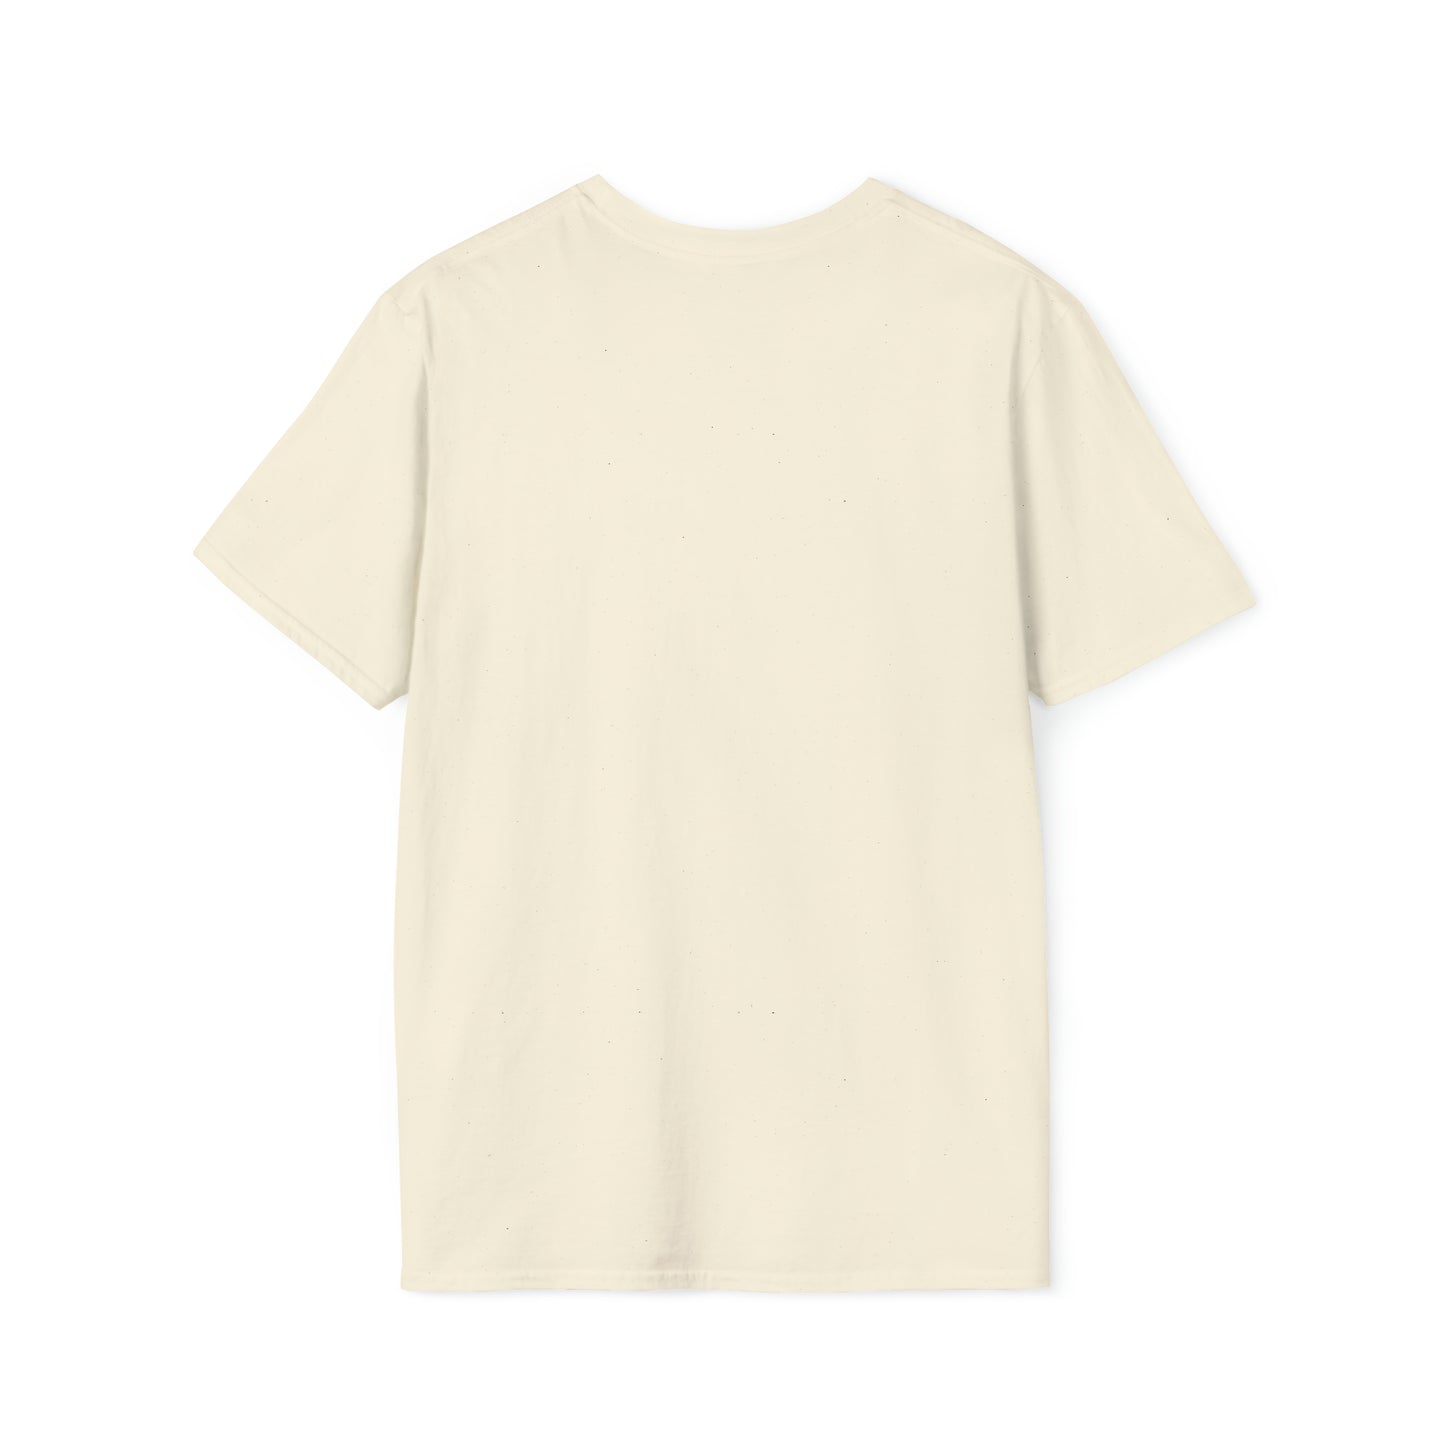 Knotty Girl Unisex Softstyle T-Shirt